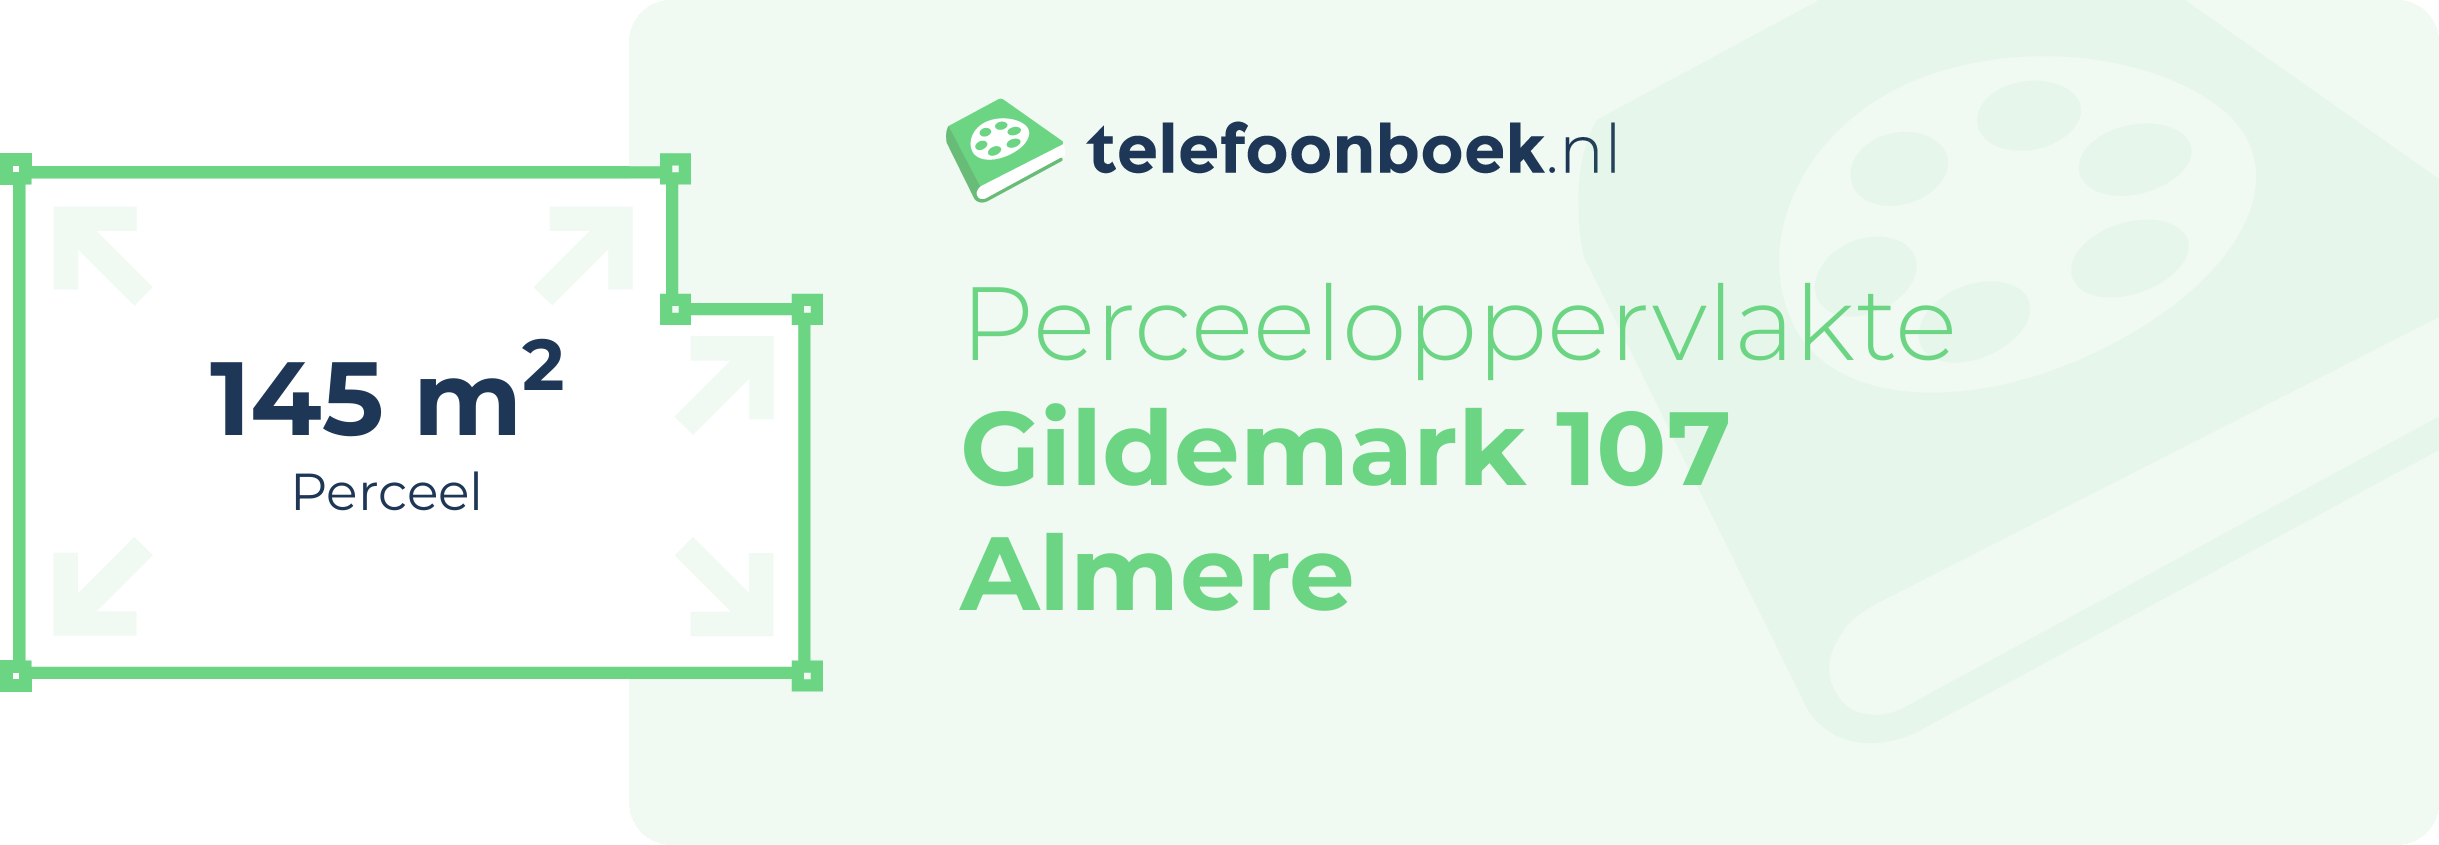 Perceeloppervlakte Gildemark 107 Almere